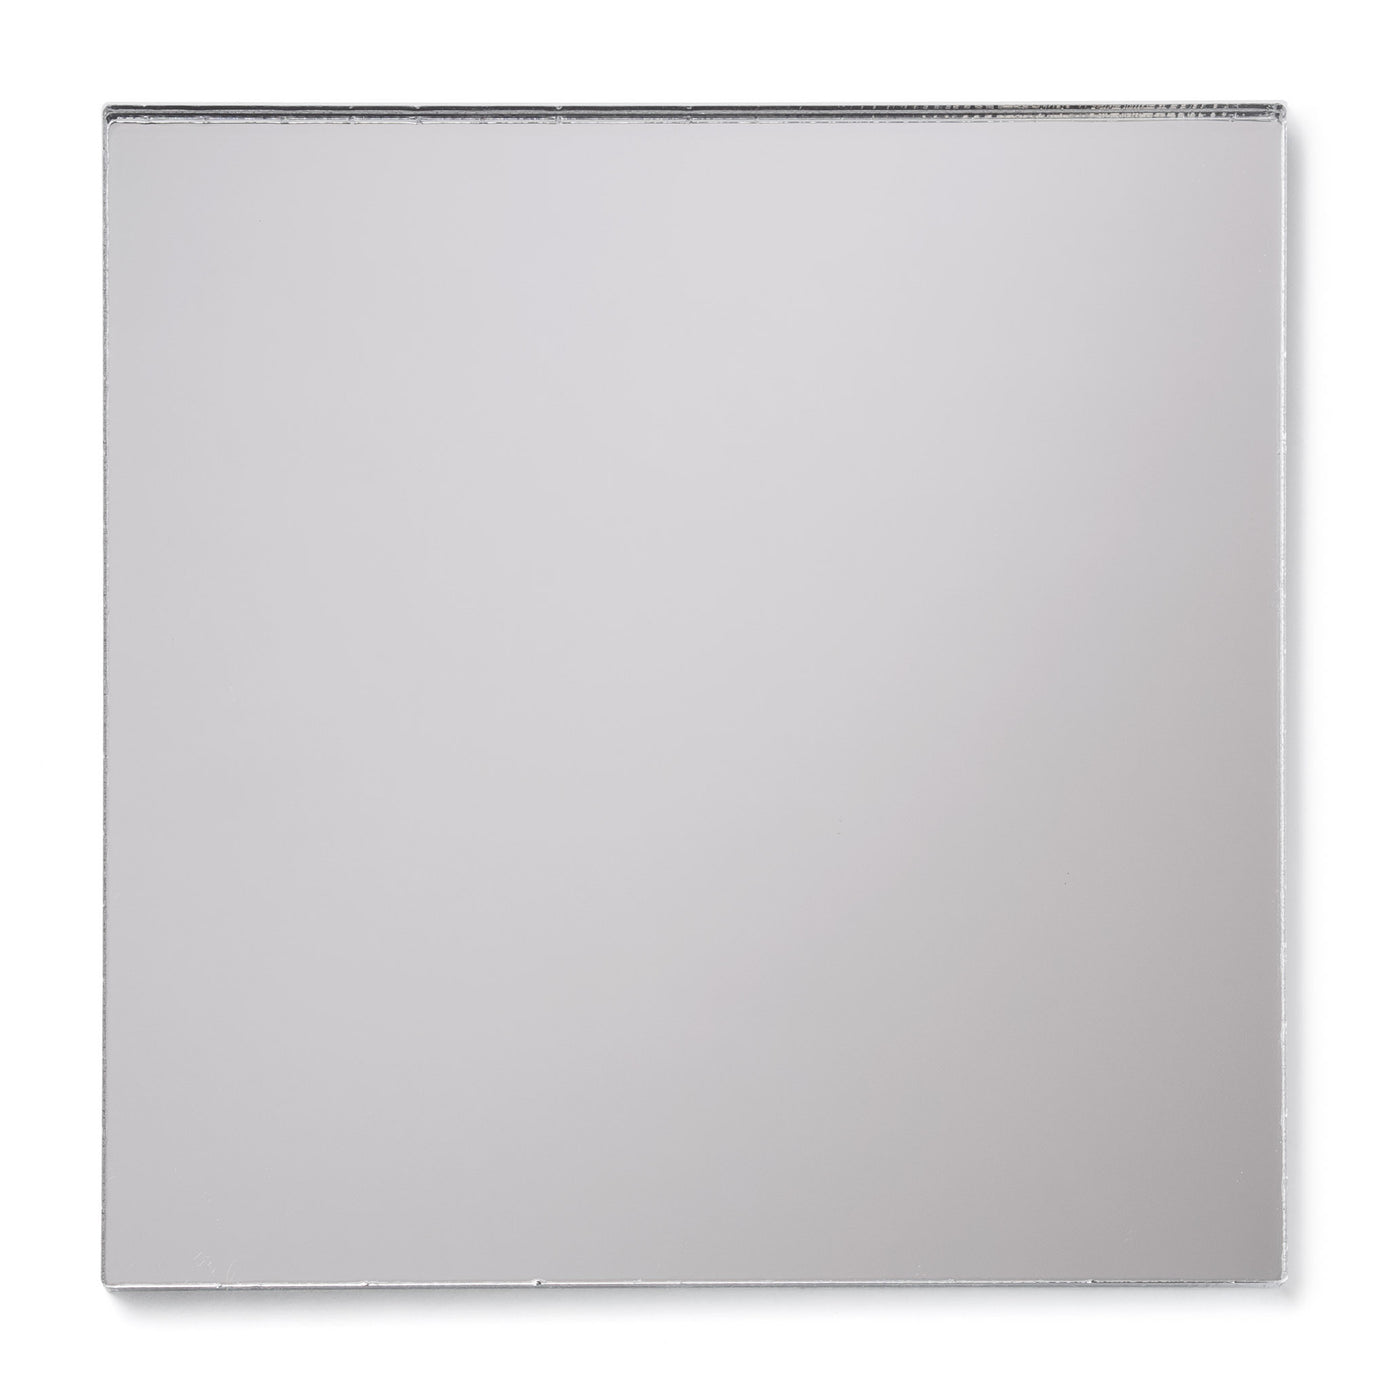 large silver plastic mirror sheet 4x8